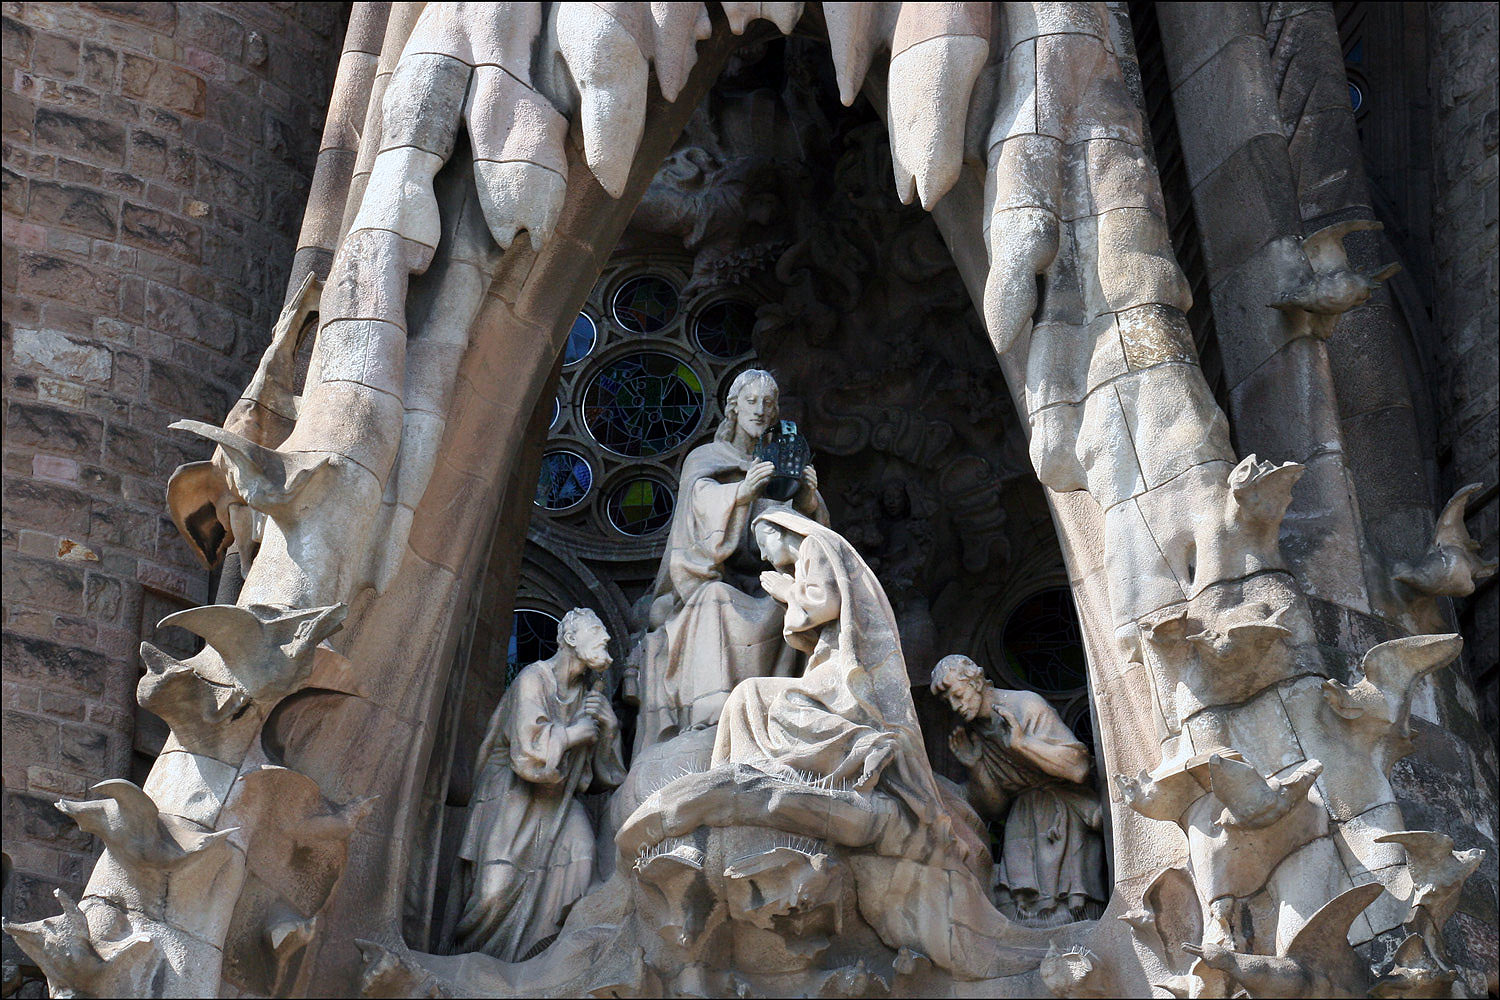 Sagrada Familia by Gaudi - Basilica in Barcelona, Spain - 137 Year Project 43